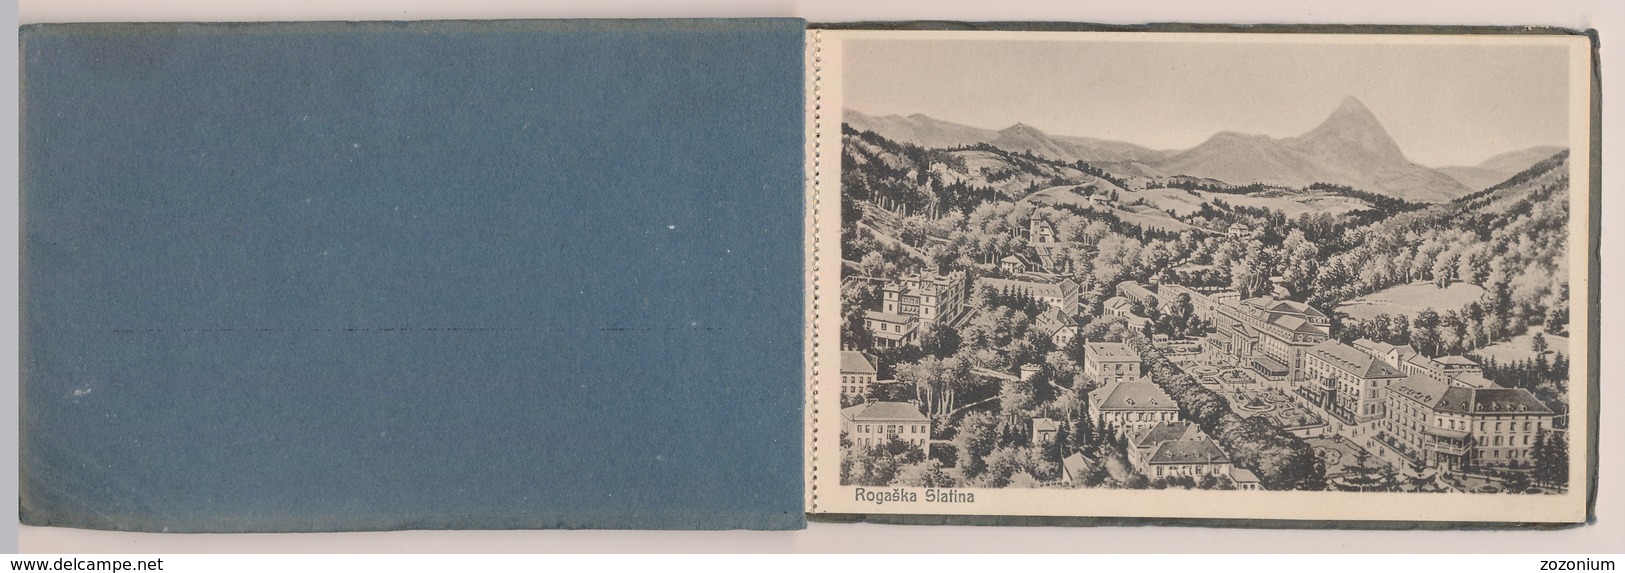 SLOVENIA - ROGASKA SLATINA, Carnet - Zalozila Flora Flora-Neckermann Album W 10 Postcards , Old - Slovenia